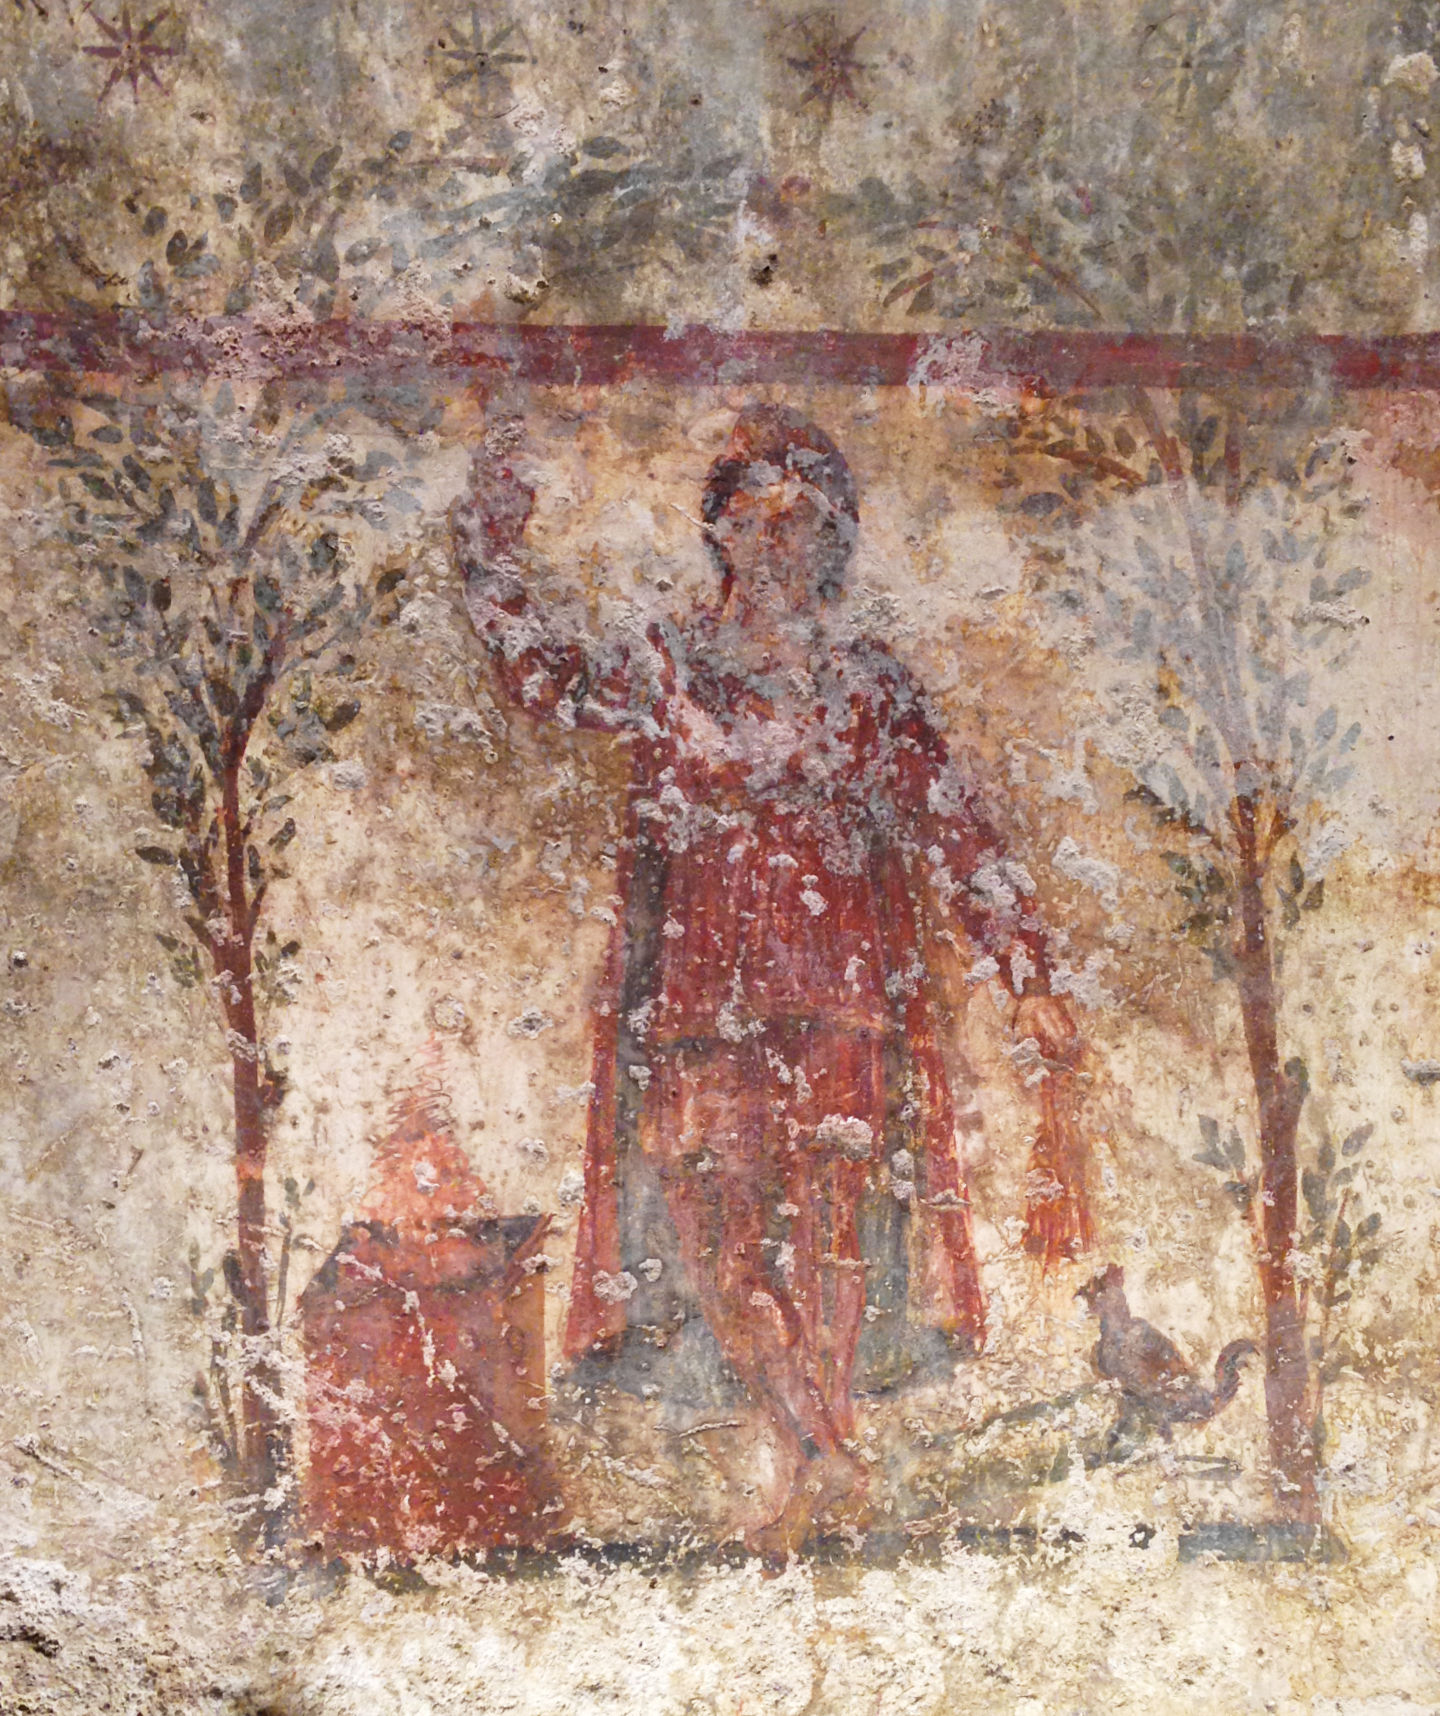 Cautes fresco on Santa Maria Capua Vetere